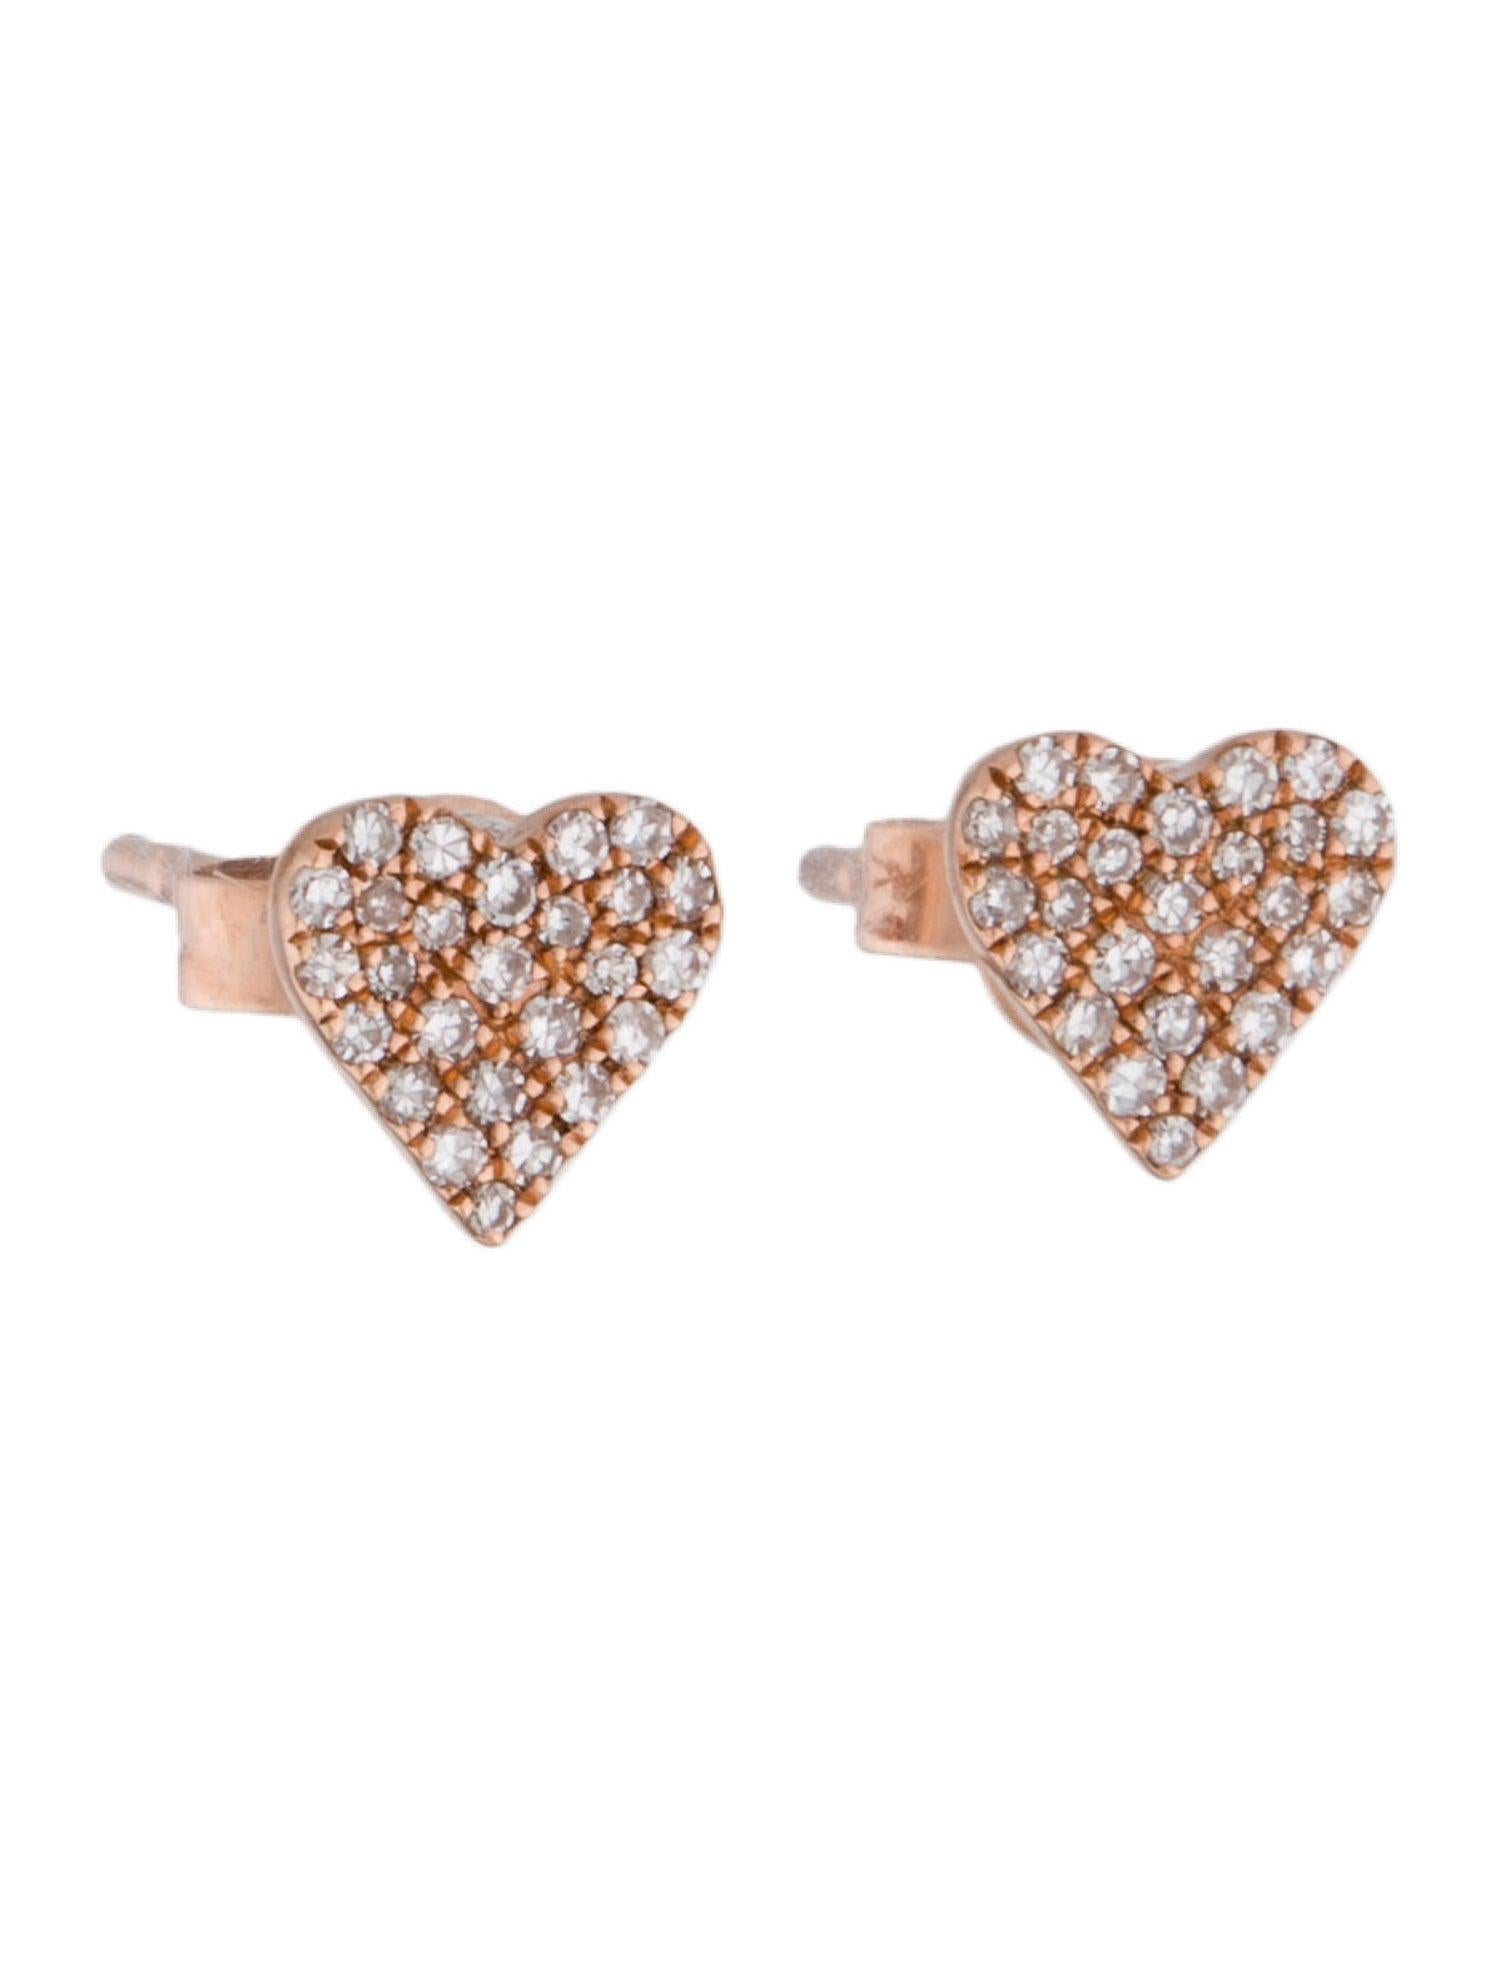 Contemporary 14 Karat Rose Gold 0.10 Carat Diamond Heart Earrings For Sale